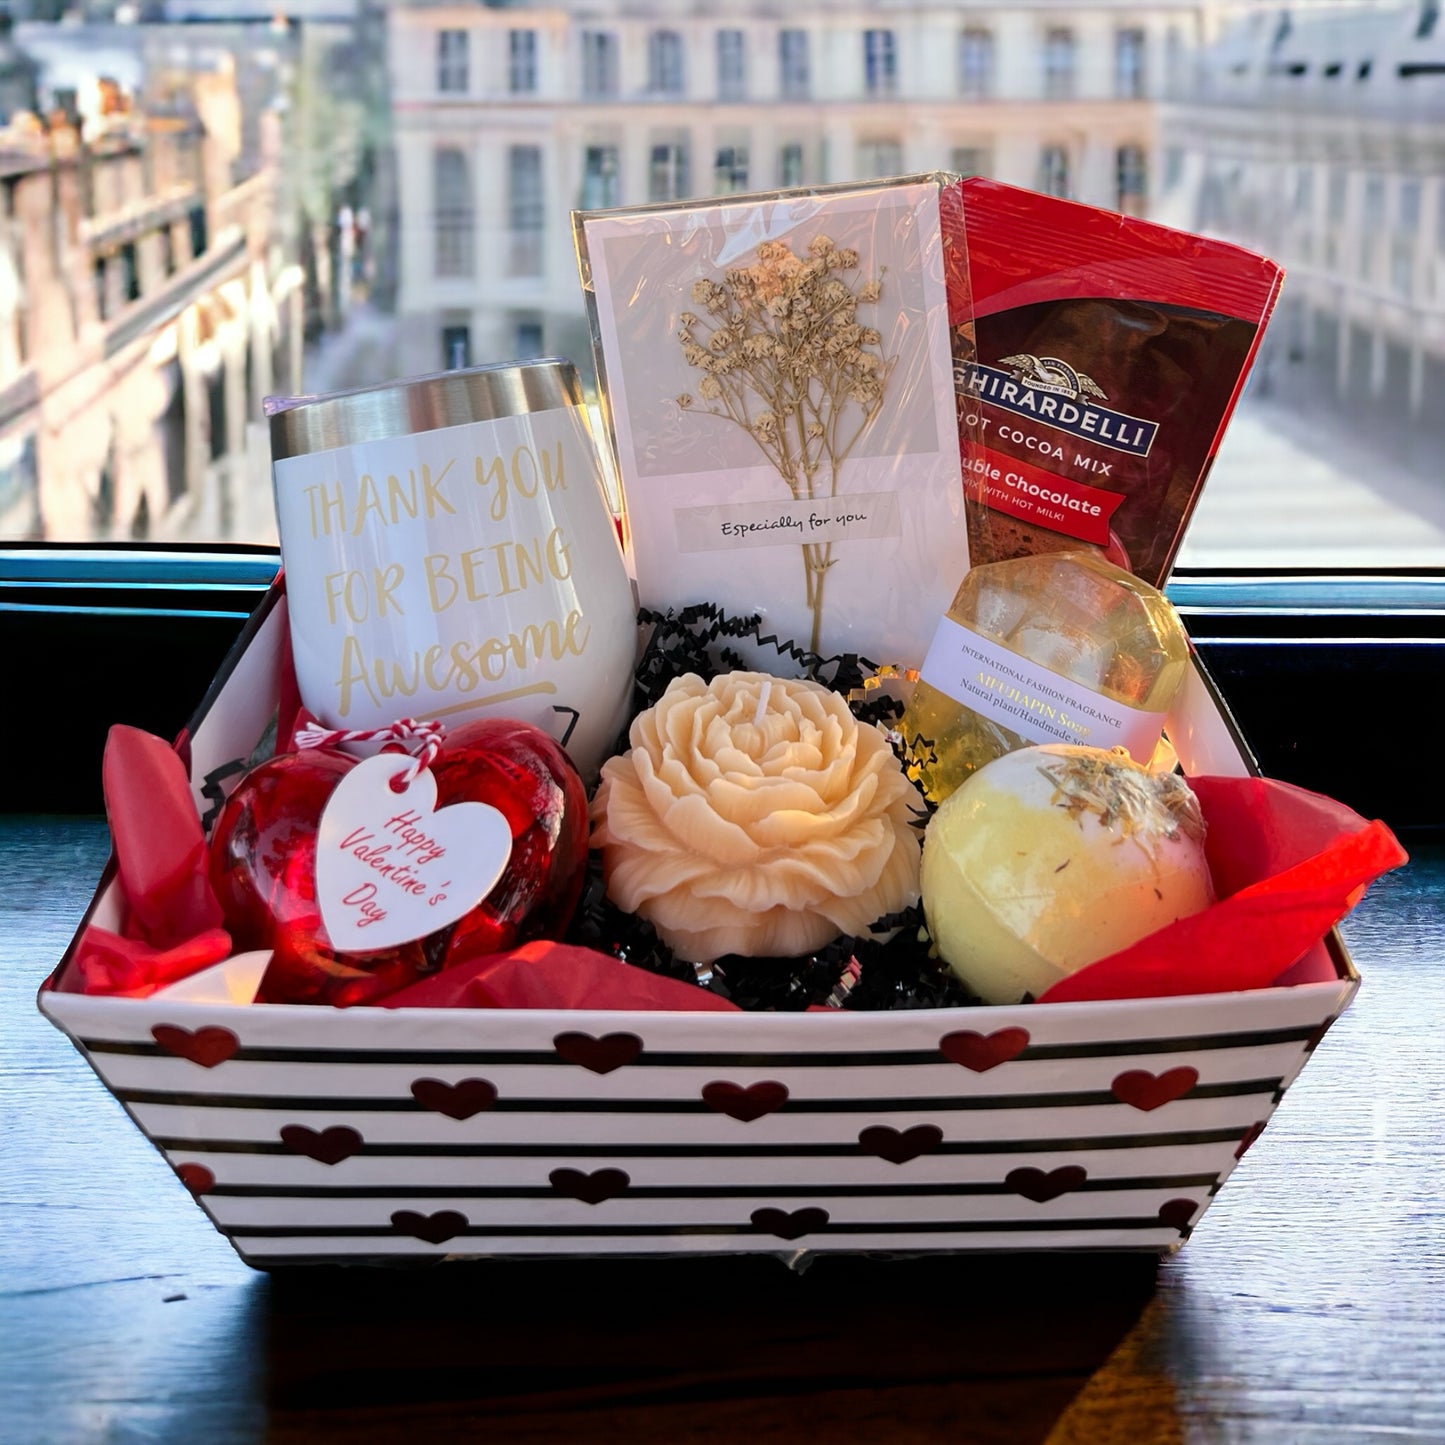 Red Velvet Hearts Valentine's Day Gift Basket